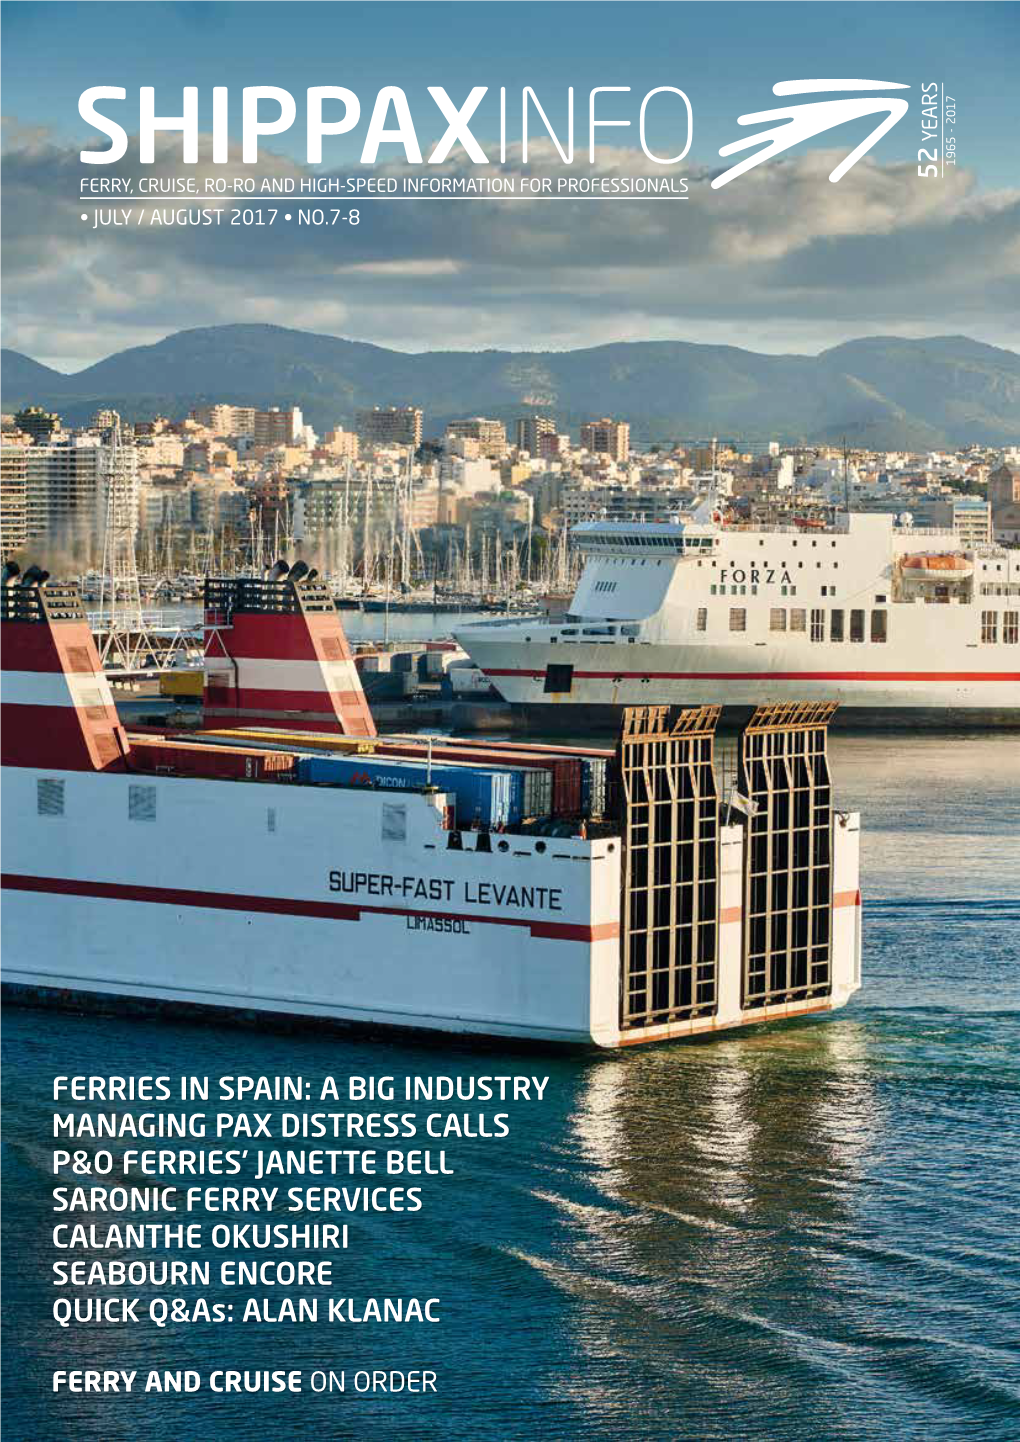 Ferries in Spain: a Big Industry Managing Pax Distress Calls P&O Ferries